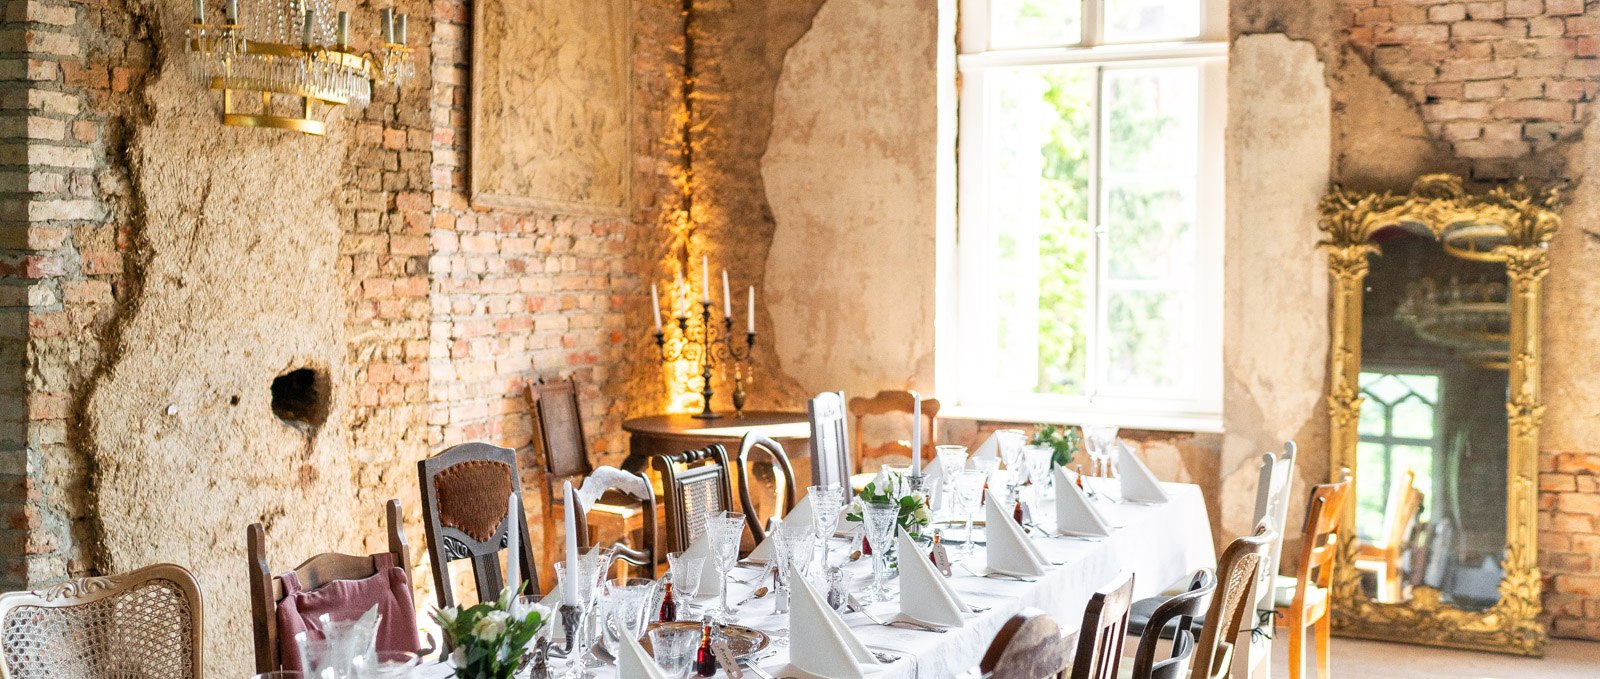 Set table for a dream wedding, © Herrenhaus Vogelsang / DOMUS Images Alexander Rudolph